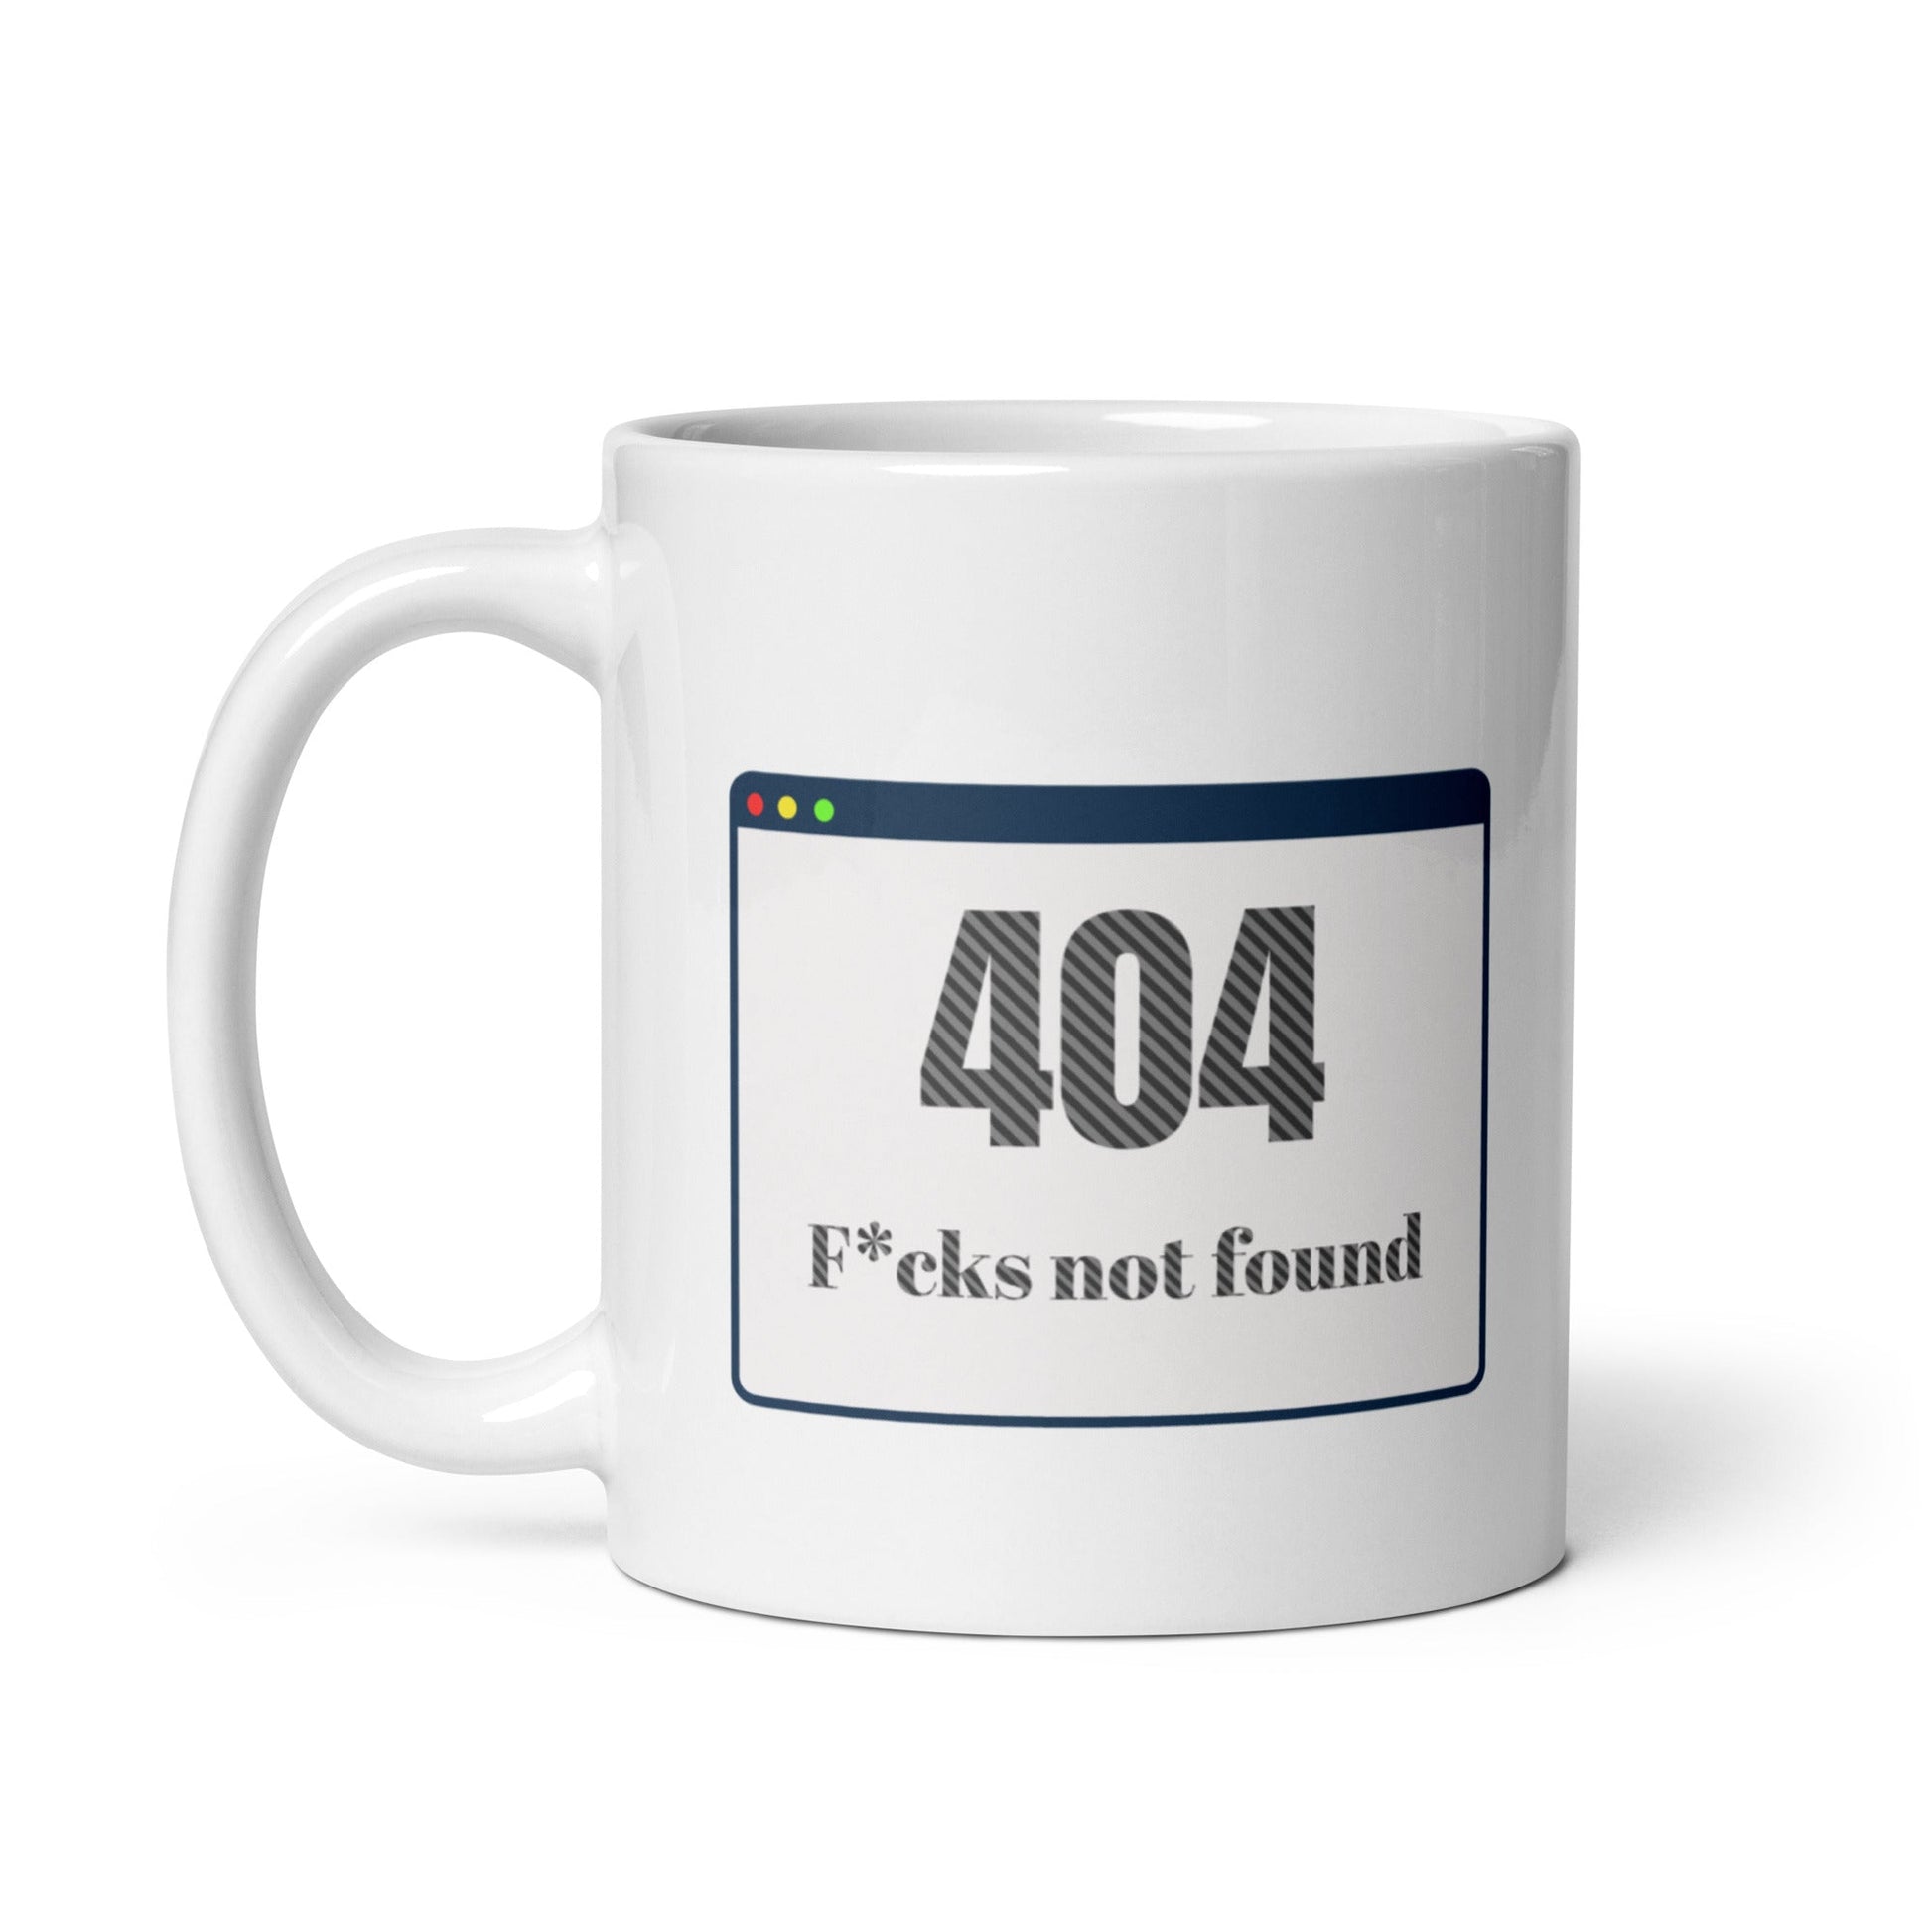 404 Error - F*cks Not Found  - White glossy mug - Premium  from T&L Kustoms - Just $12.95! Shop now at T&L Kustoms